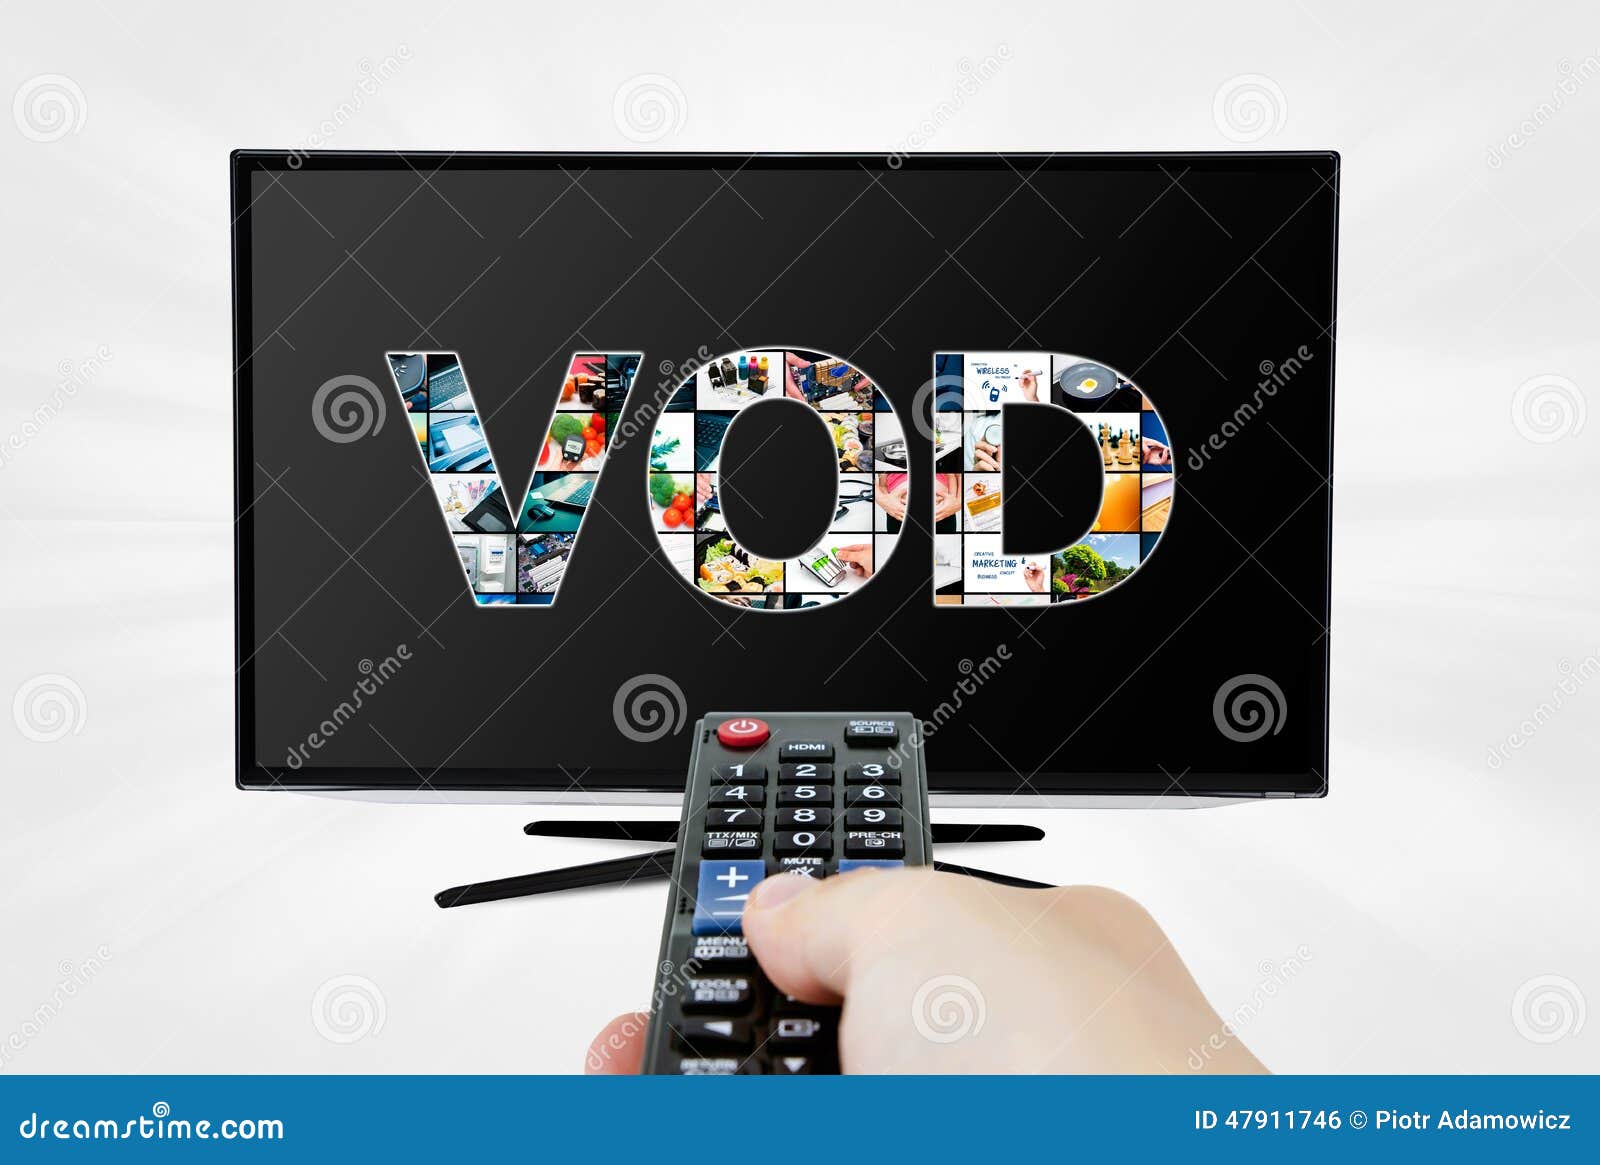 Video on Demand Service on TV Stock Photo